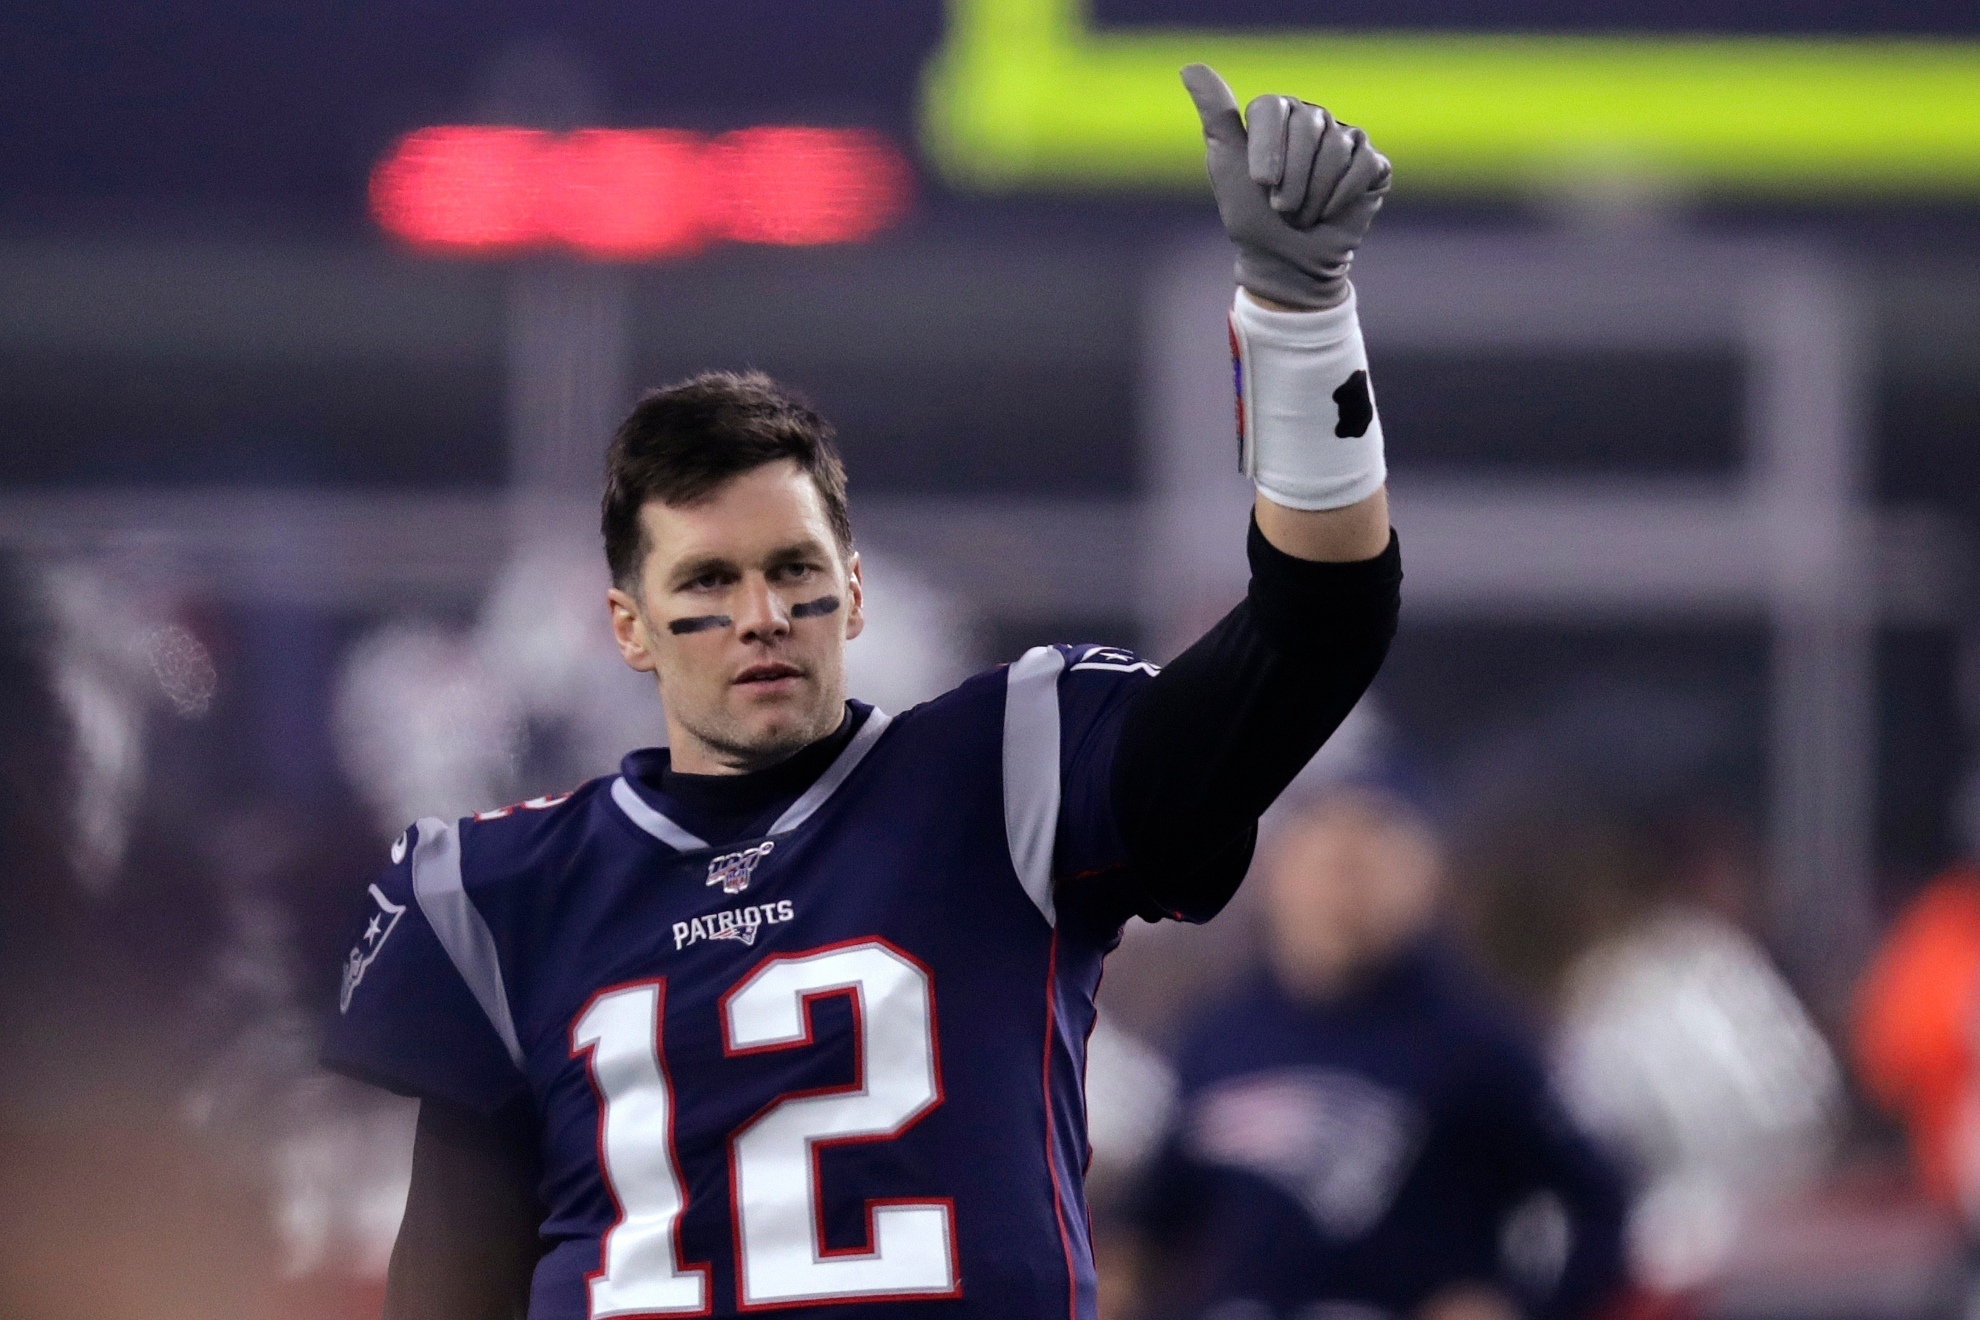 Tom Brady wearing the New England Patriots uniform.